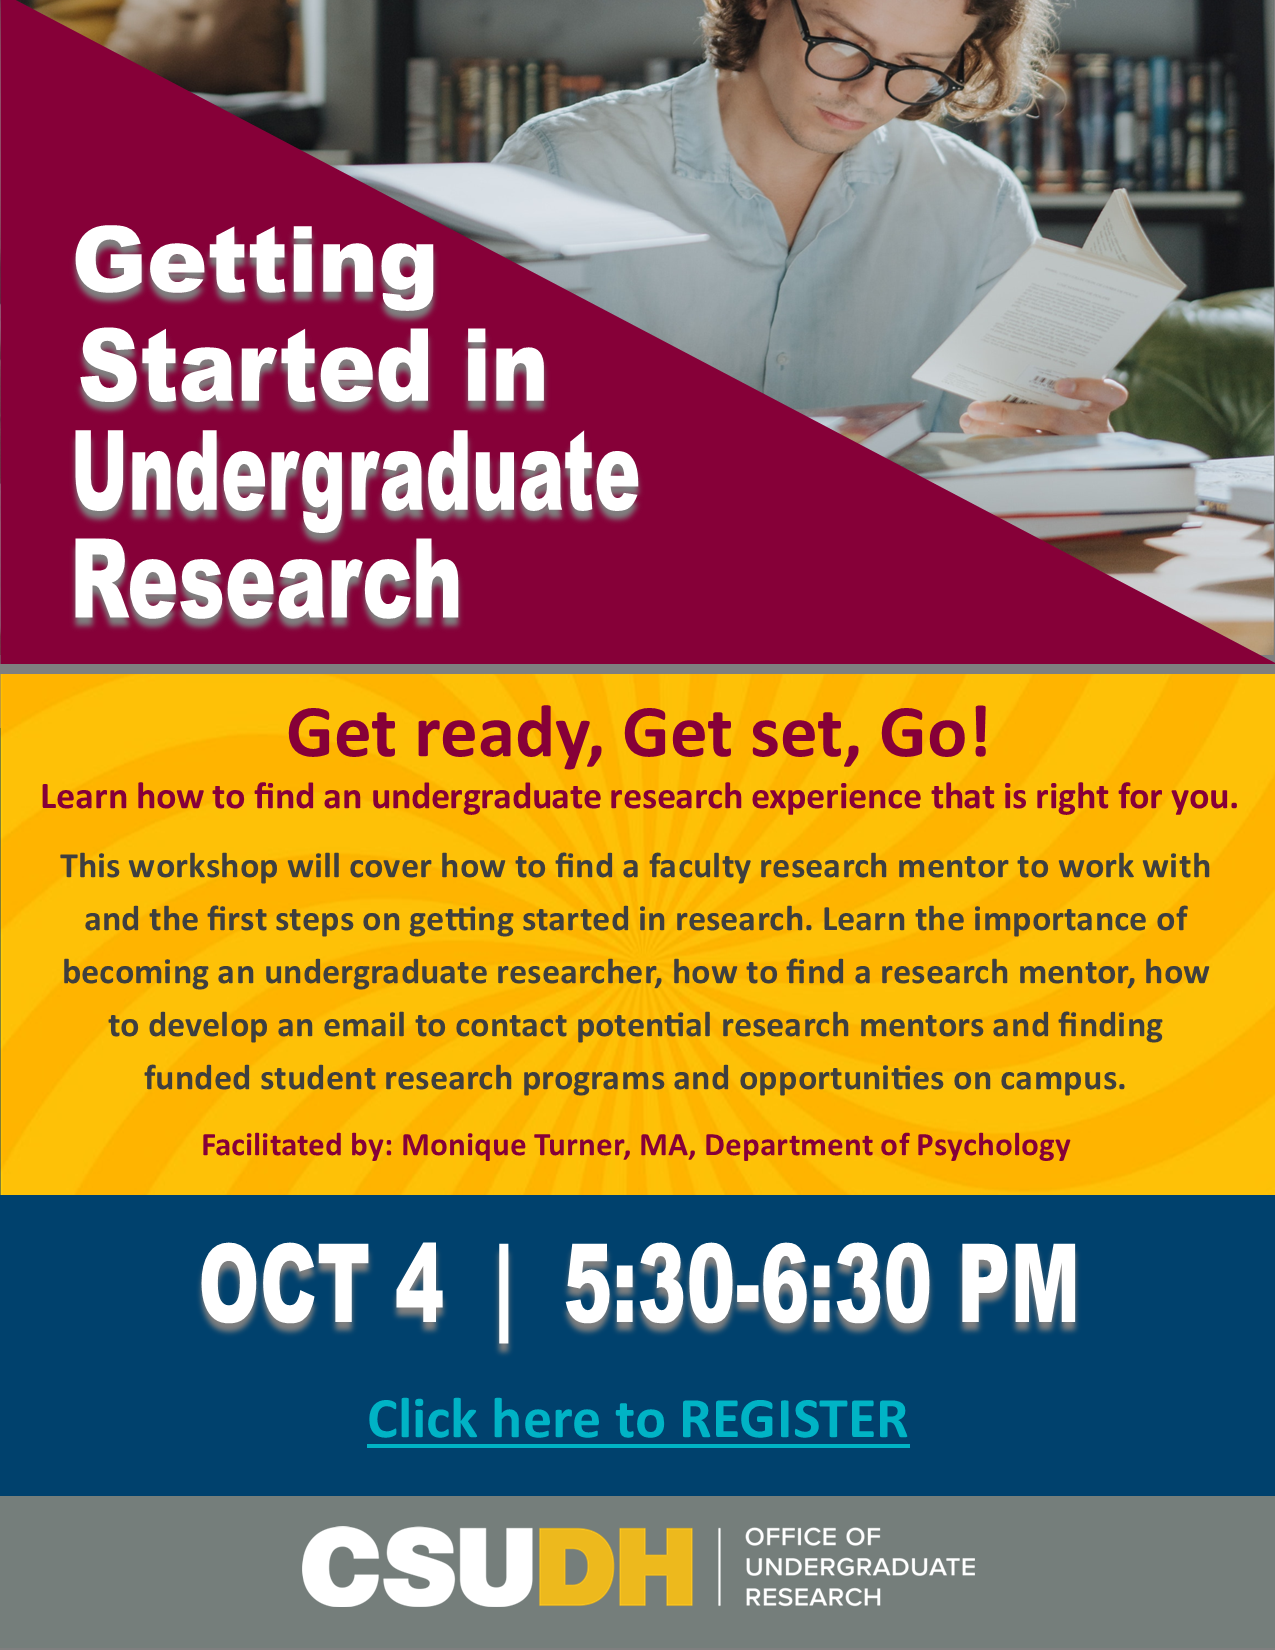 Getting Started in Undergraduate Research 10-4-21